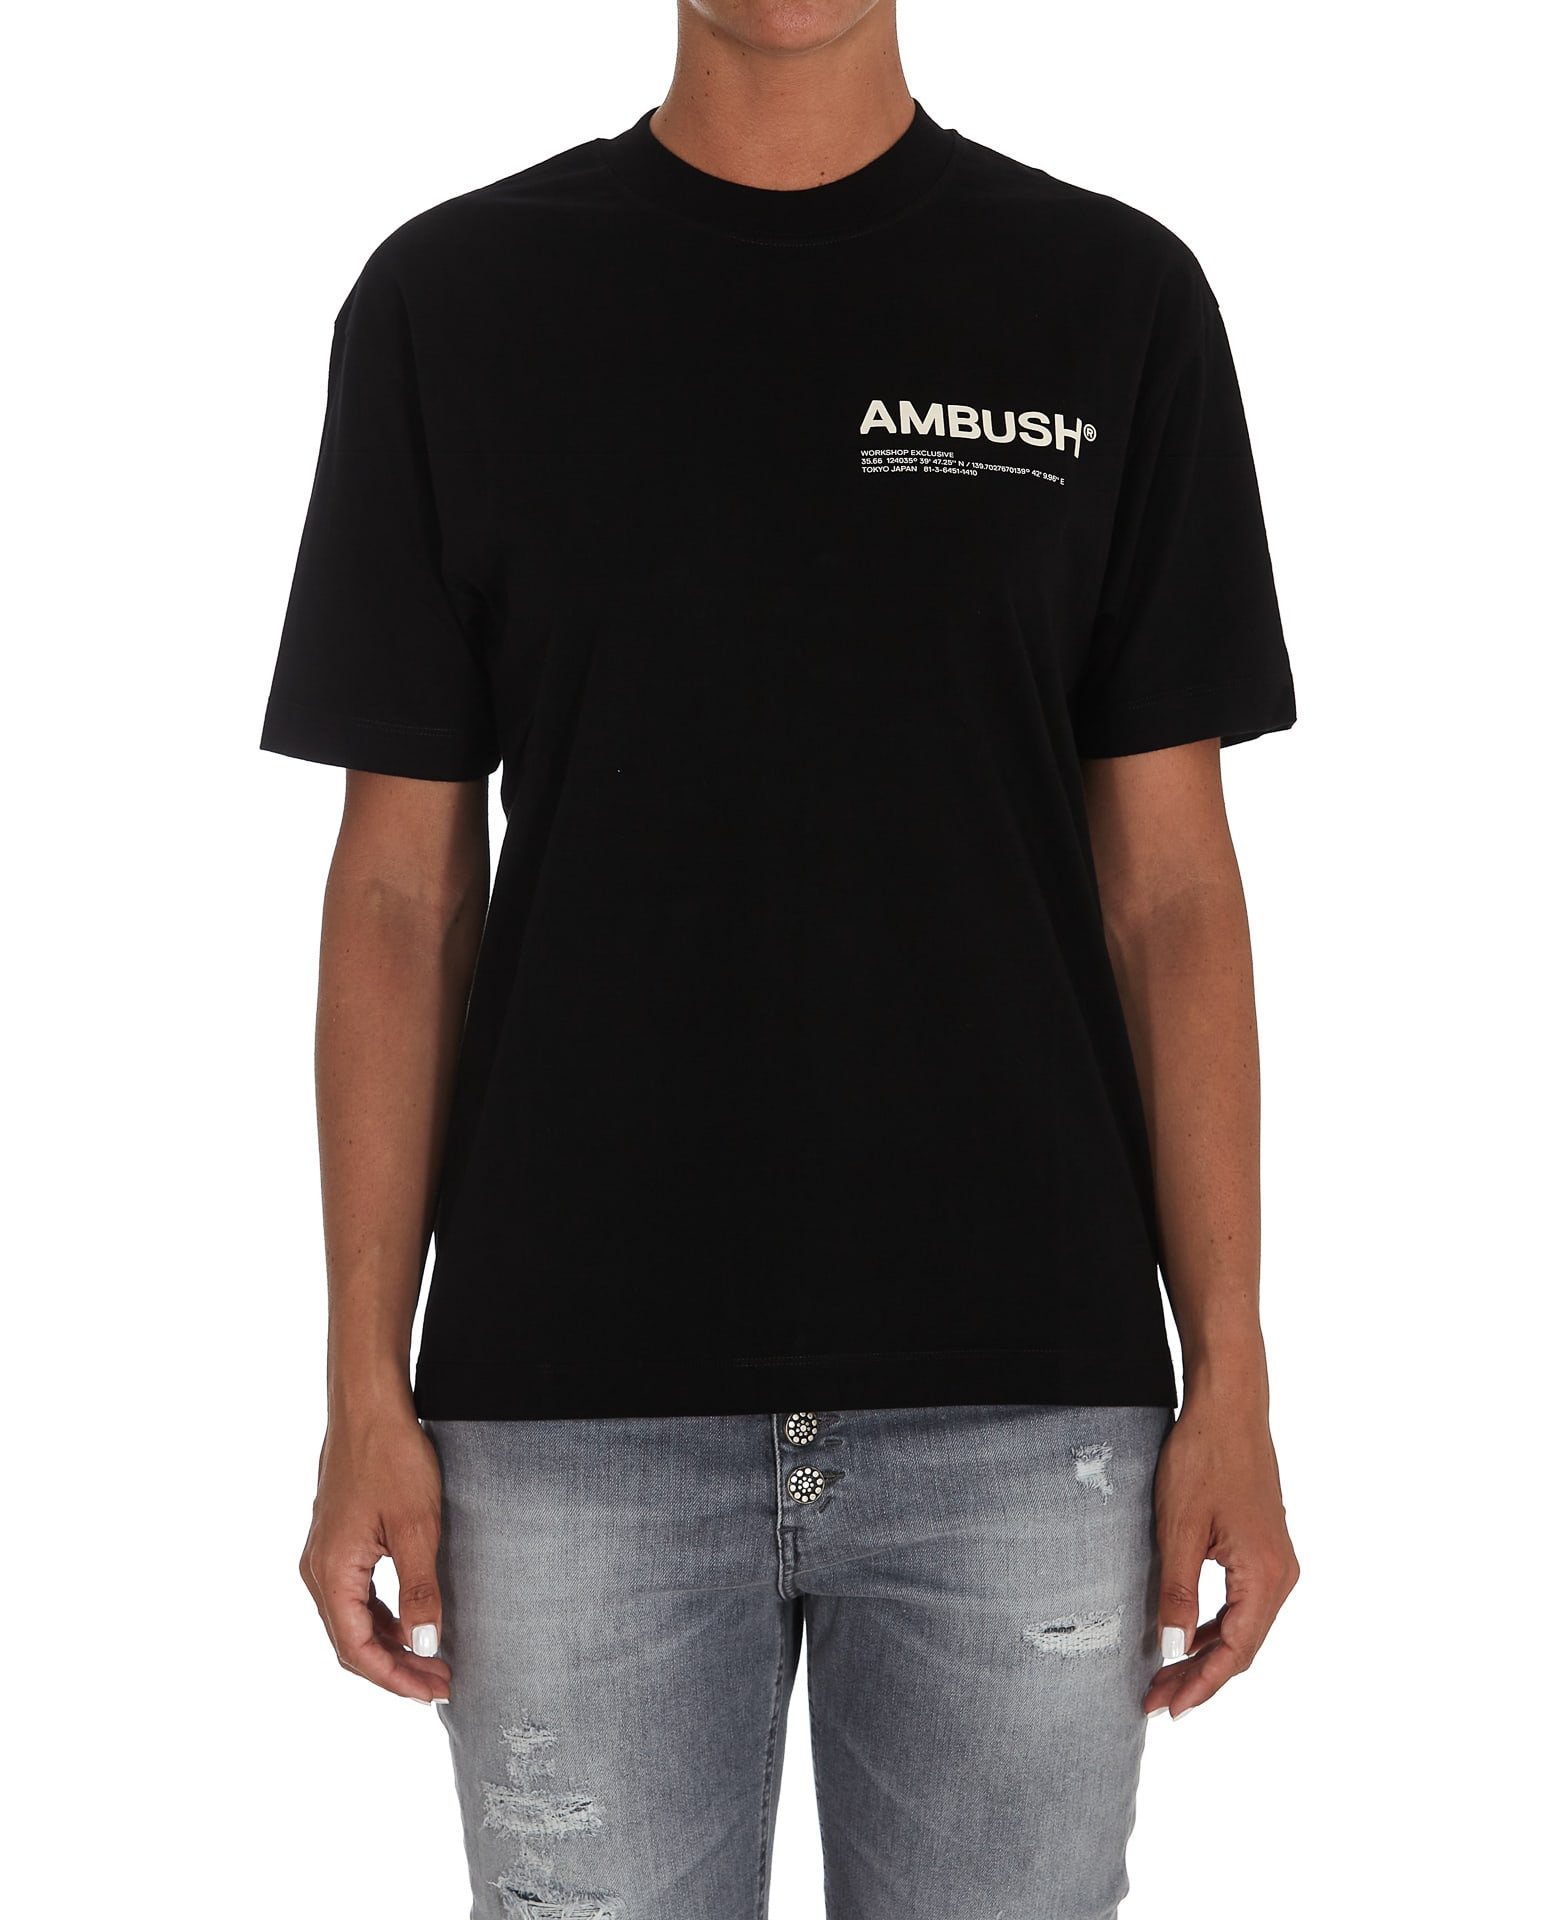 Ambush Workshop T-shirt